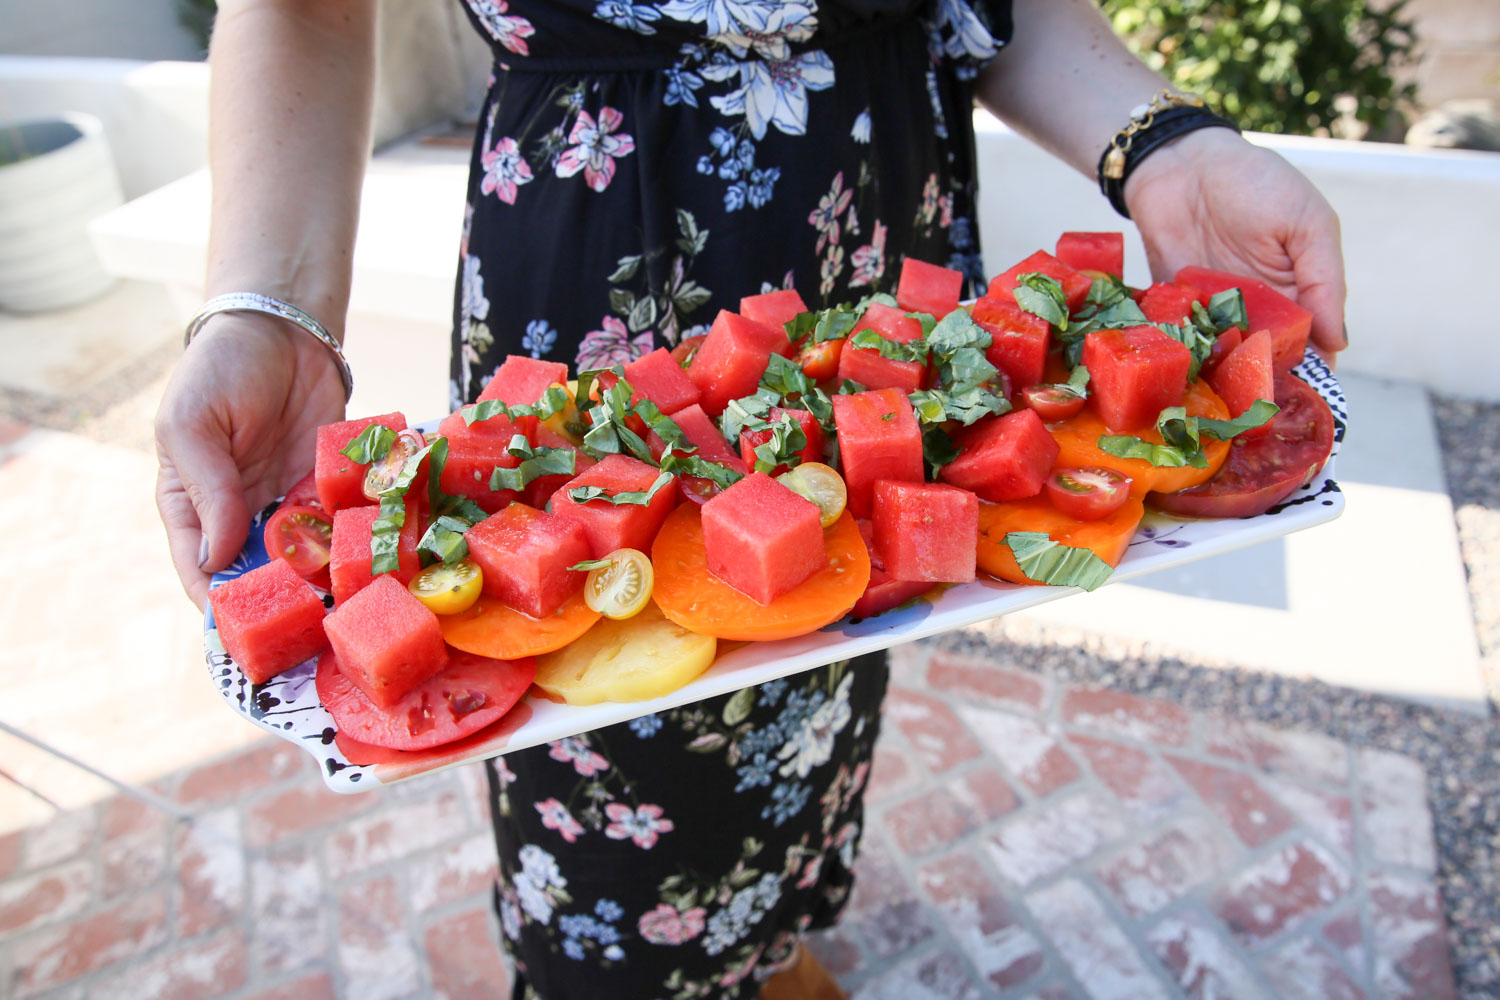 Backyard Entertaining - Watermelon and basil salad on large plate